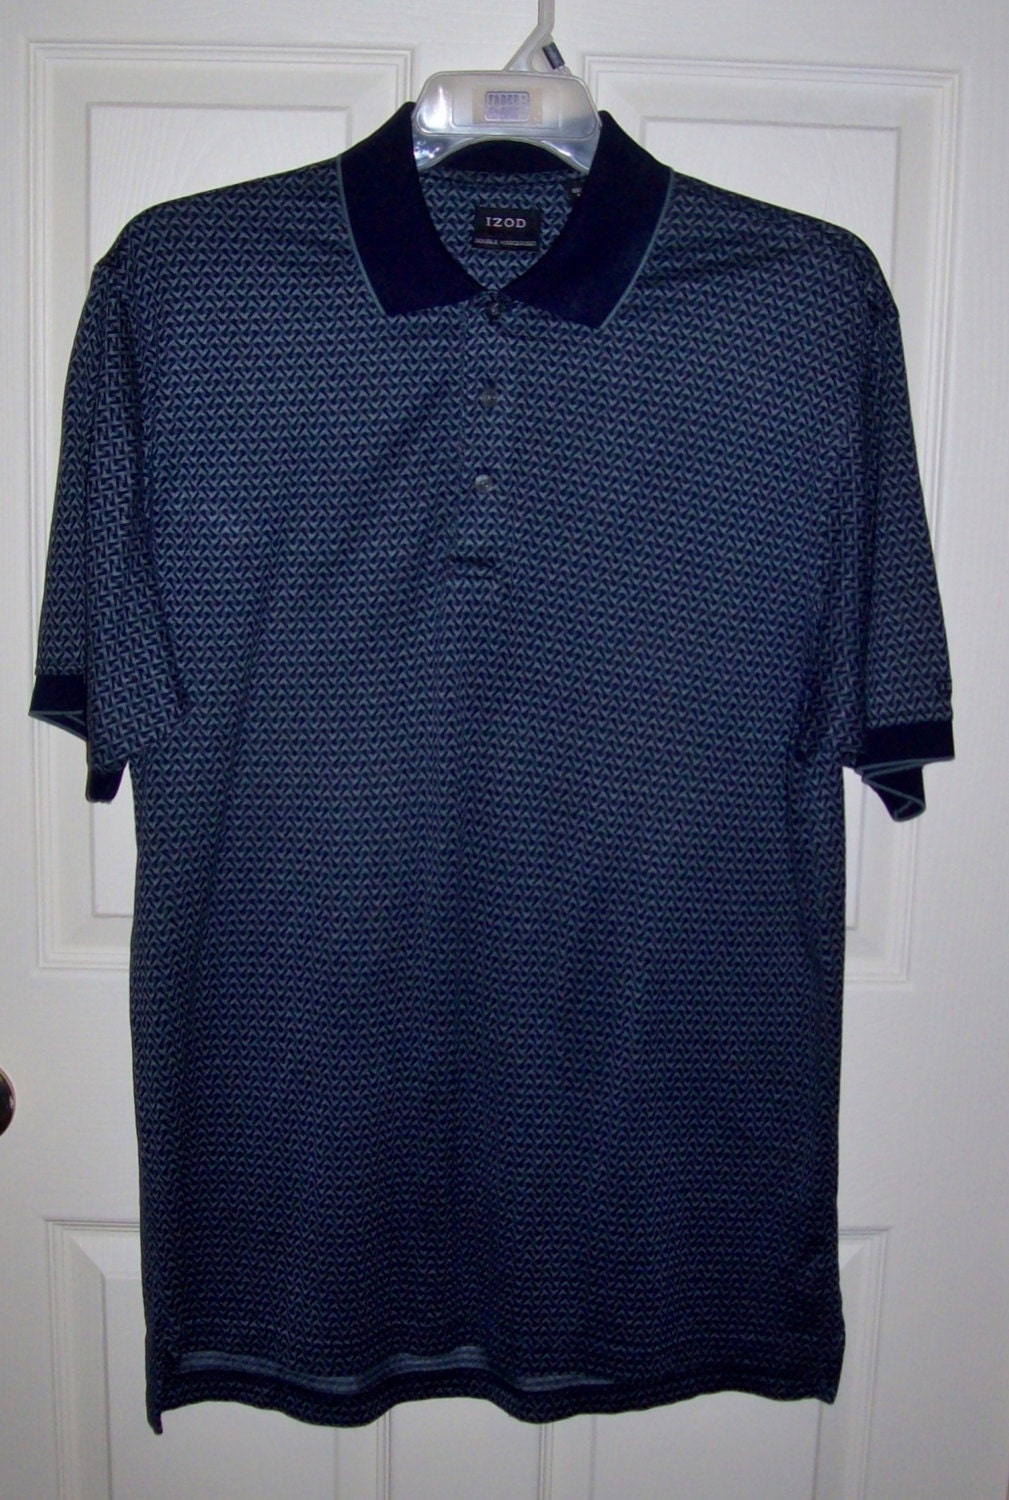 Vintage Men's Navy Blue Polo Golf Shirt by Izod Medium